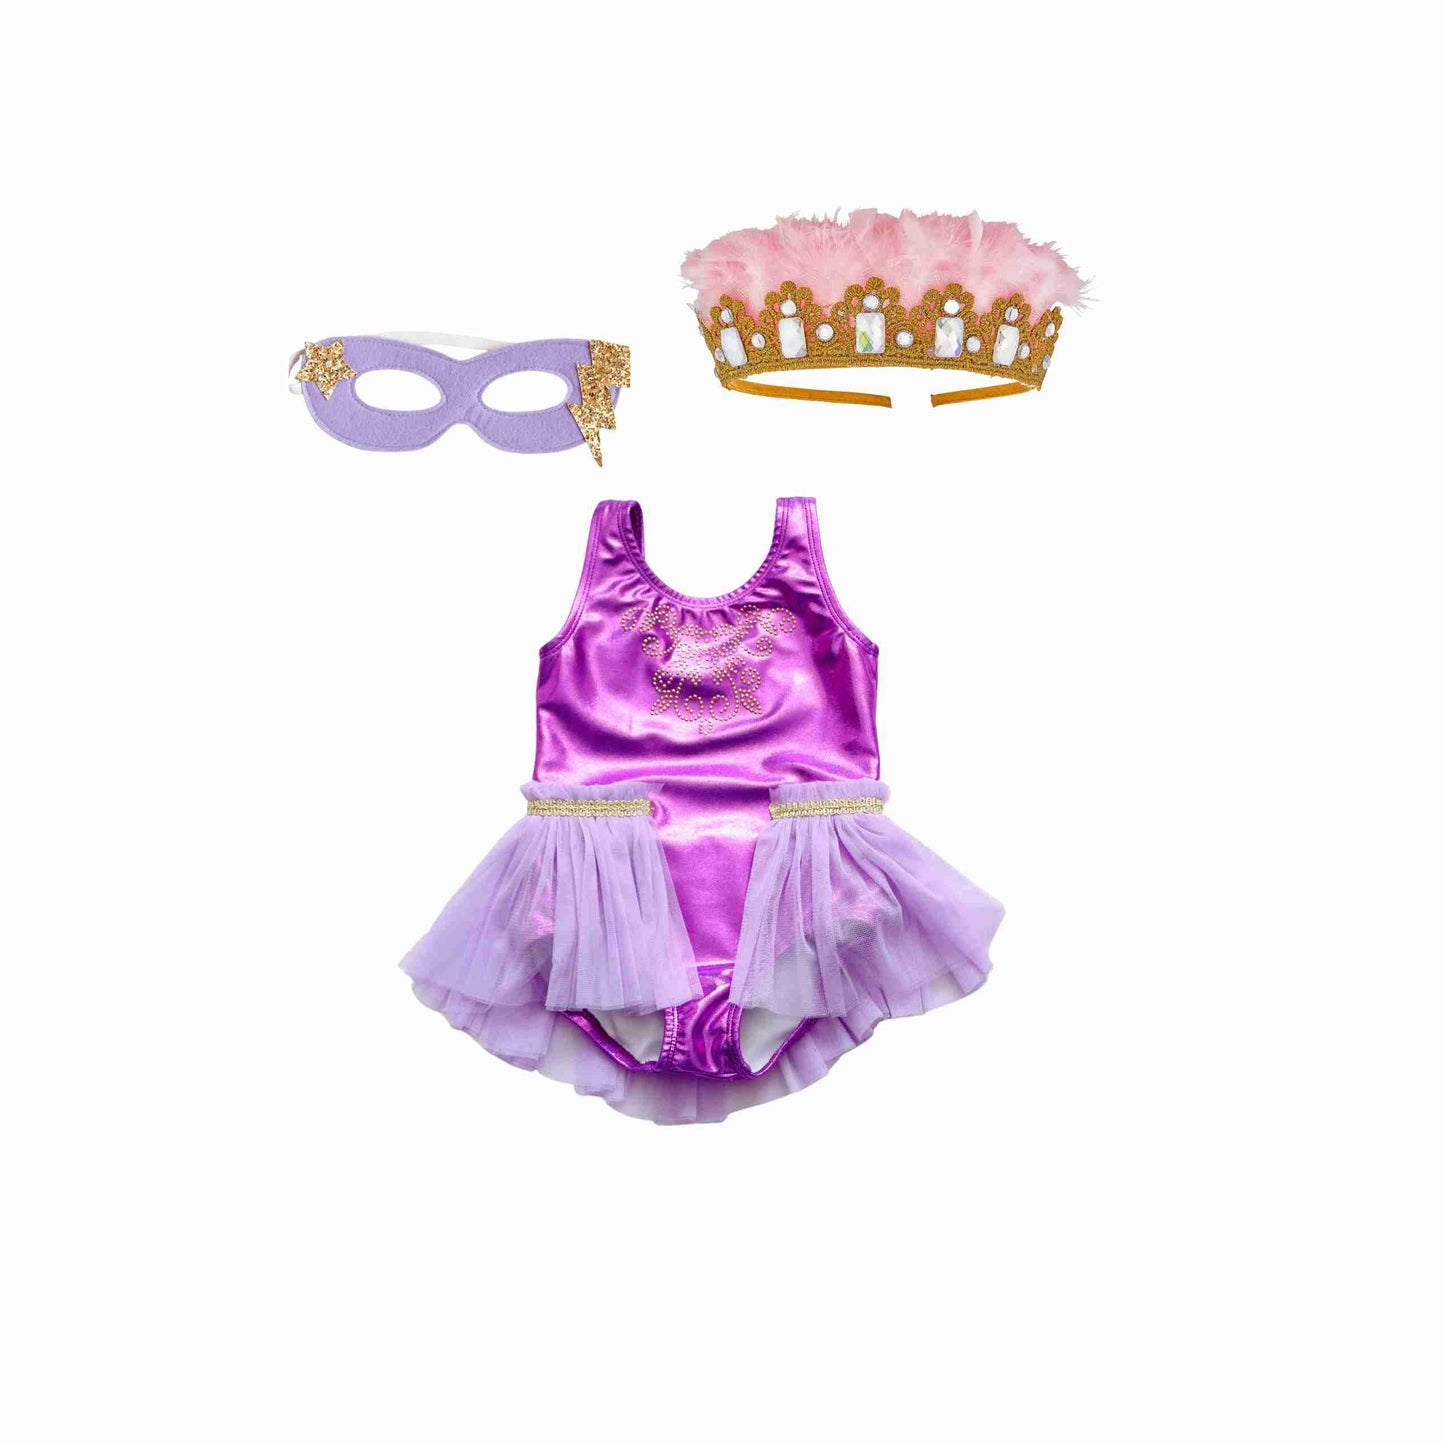 a little girl wearing a purple dress and mask